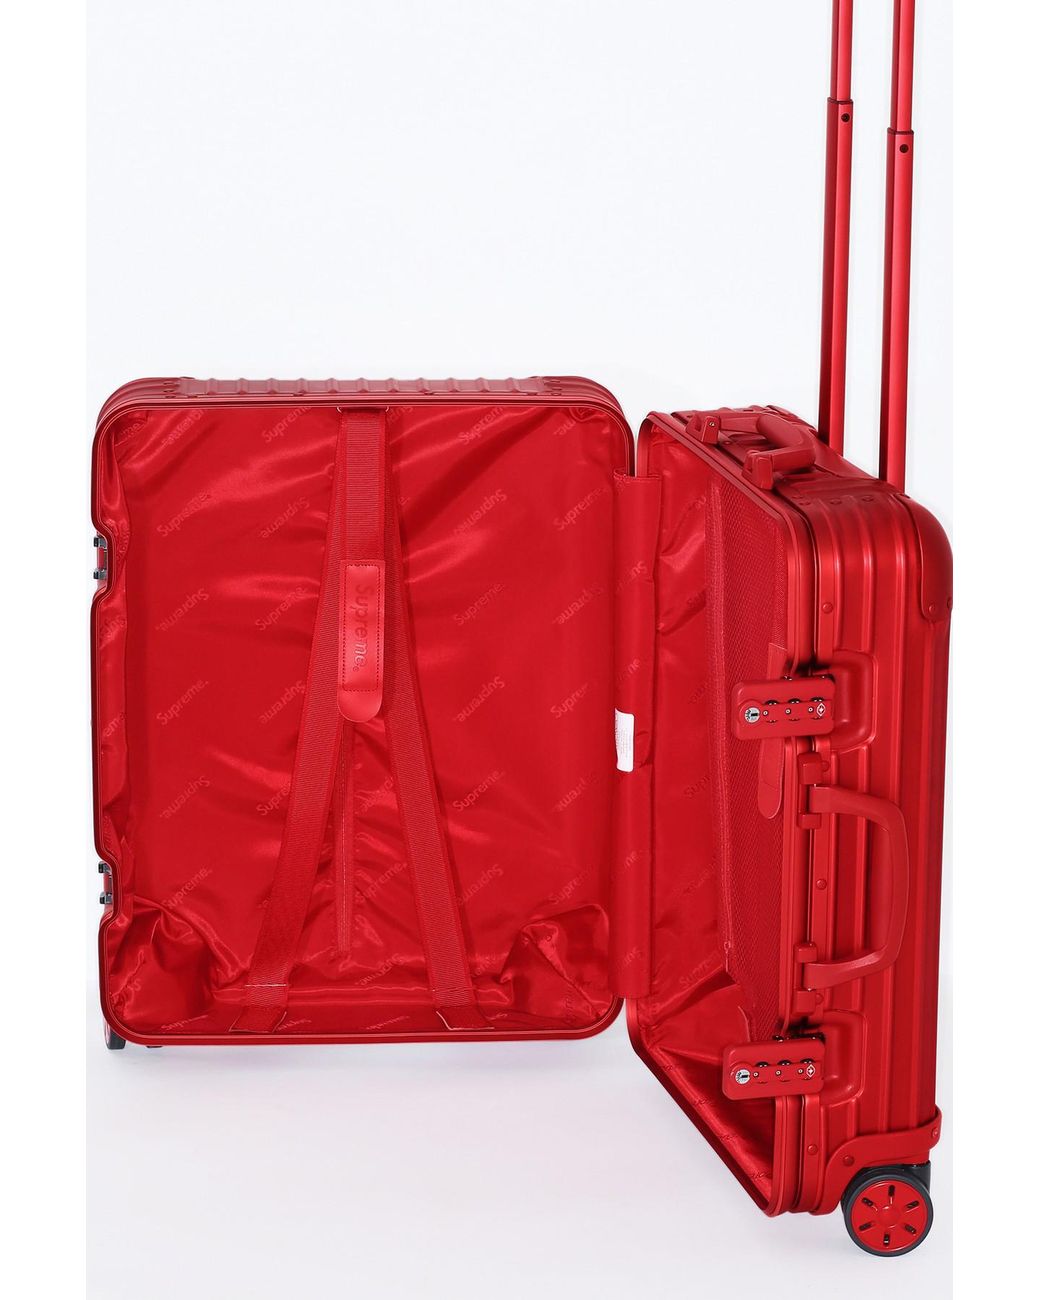 Supreme x Rimowa 82L Large Black Topaz Multiwheel SS18 4/12/18 suitcase